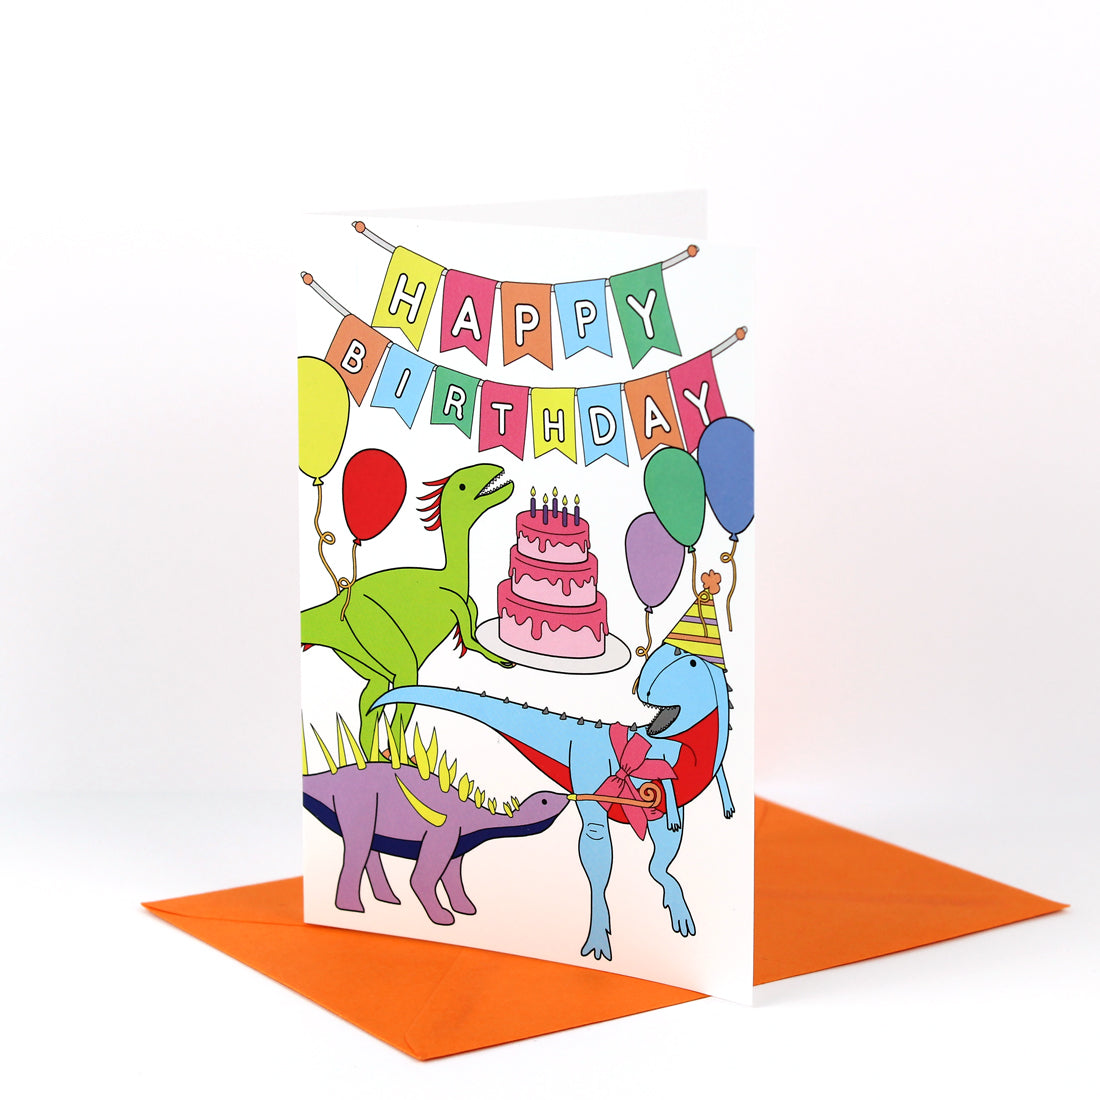 Happy birthday dinosaur card with orange envelope